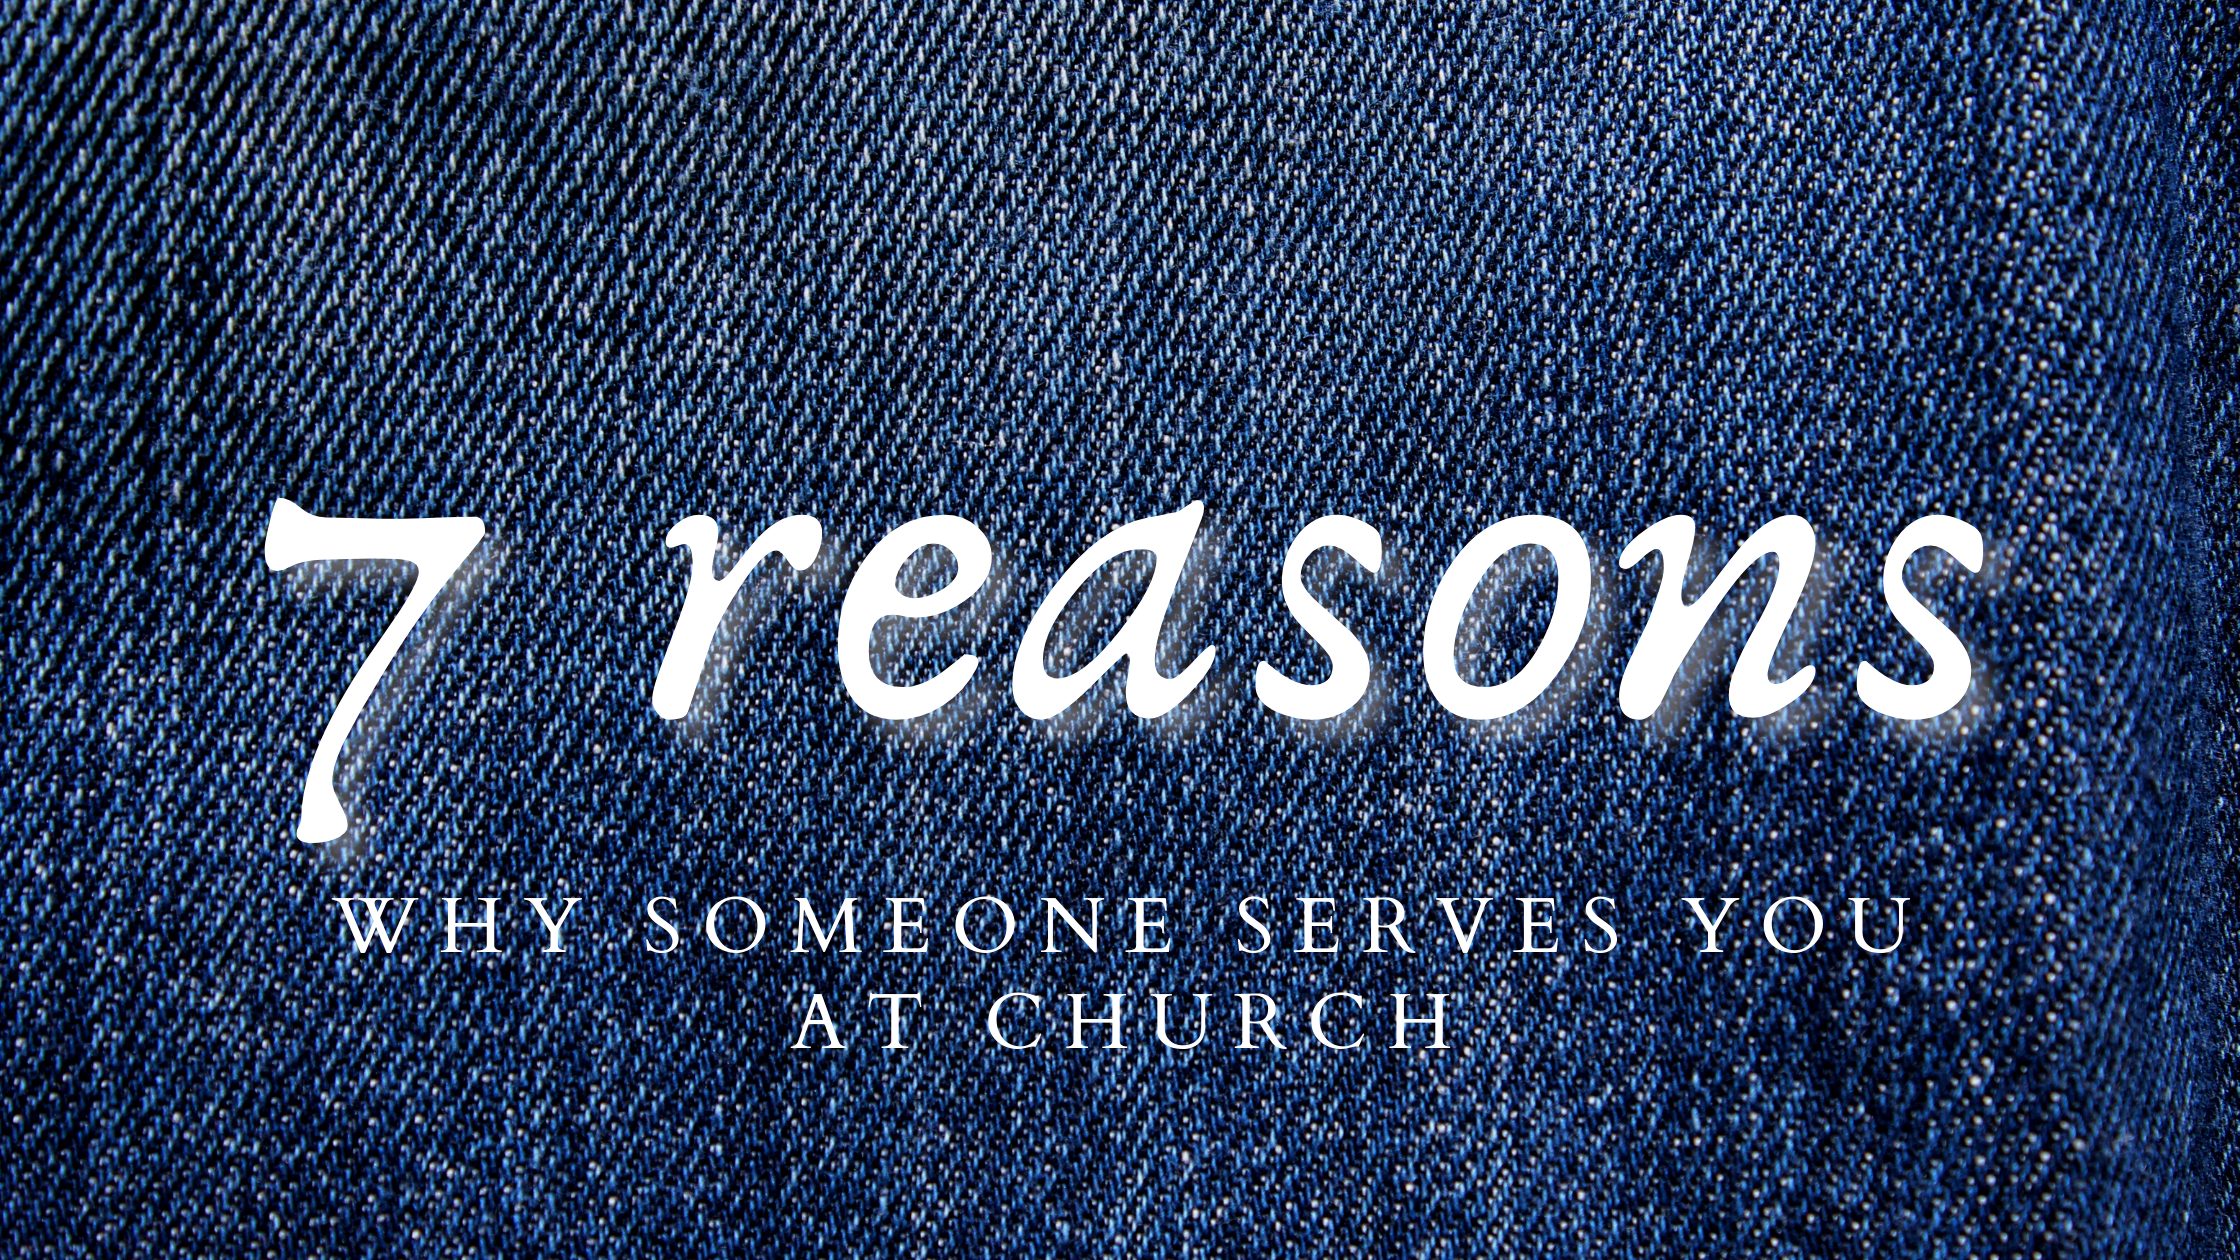 7 Reasons Why Someone Serves You at Church